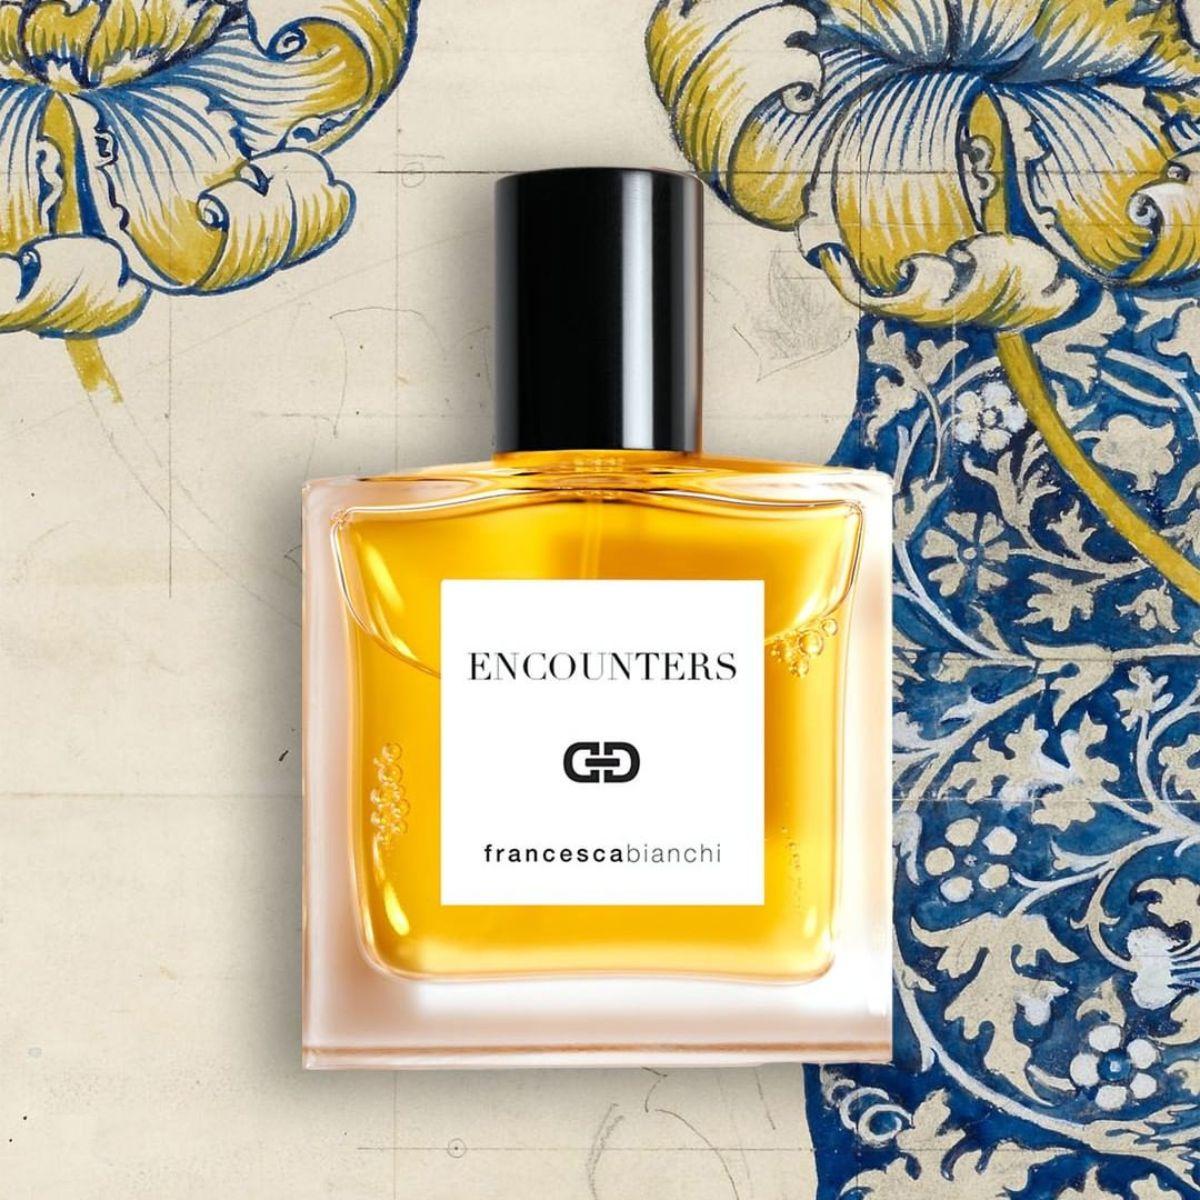 Image of Encounters extrait de parfum 30 ml by the perfume brand Francesca Bianchi